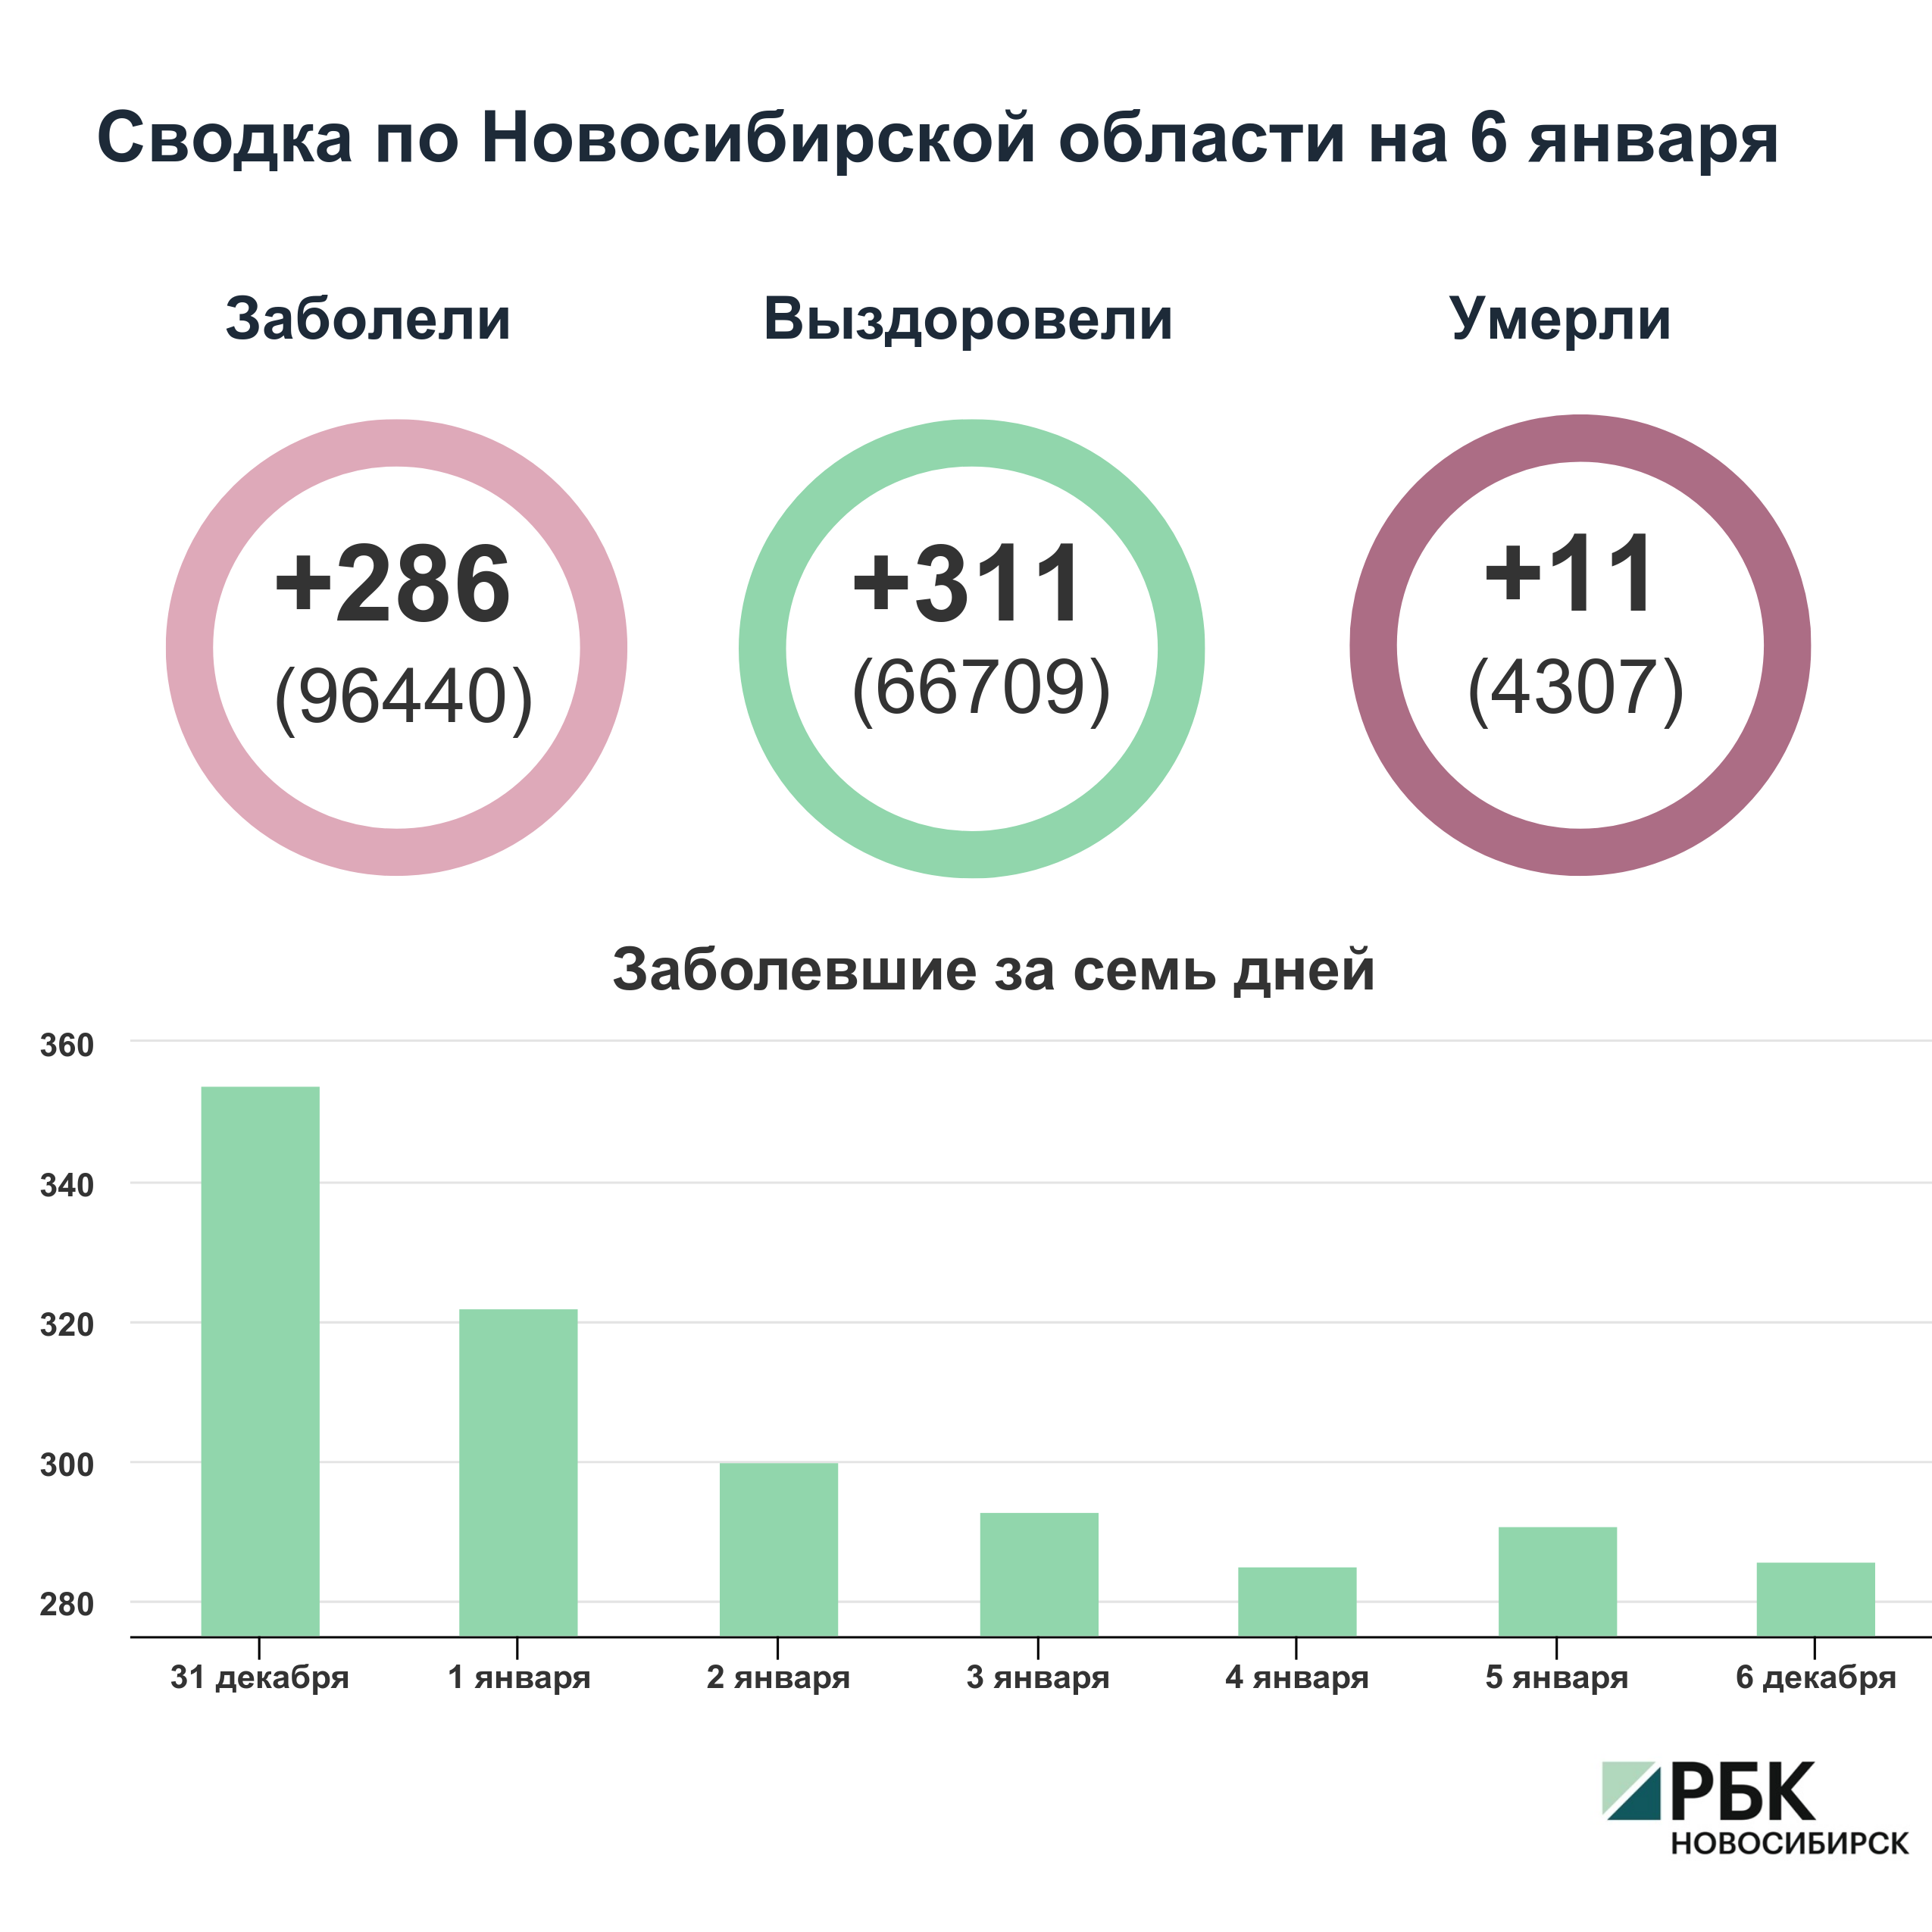 Коронавирус в Новосибирске: сводка на 6 января